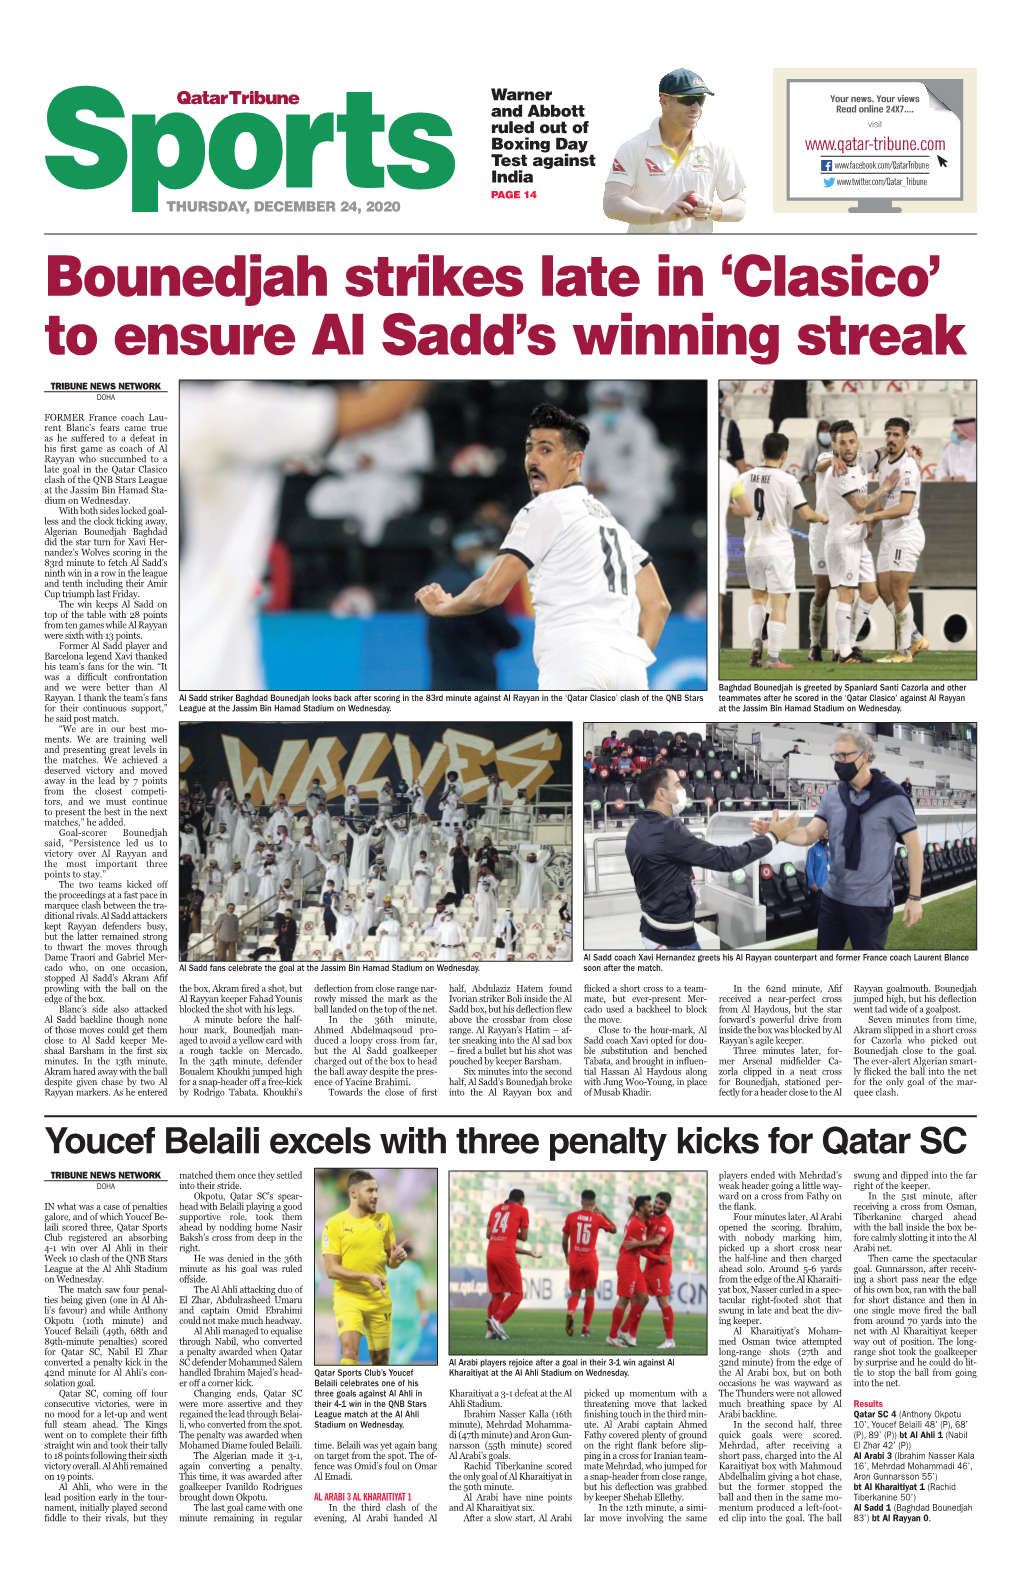 To Ensure Al Sadd's Winning Streak